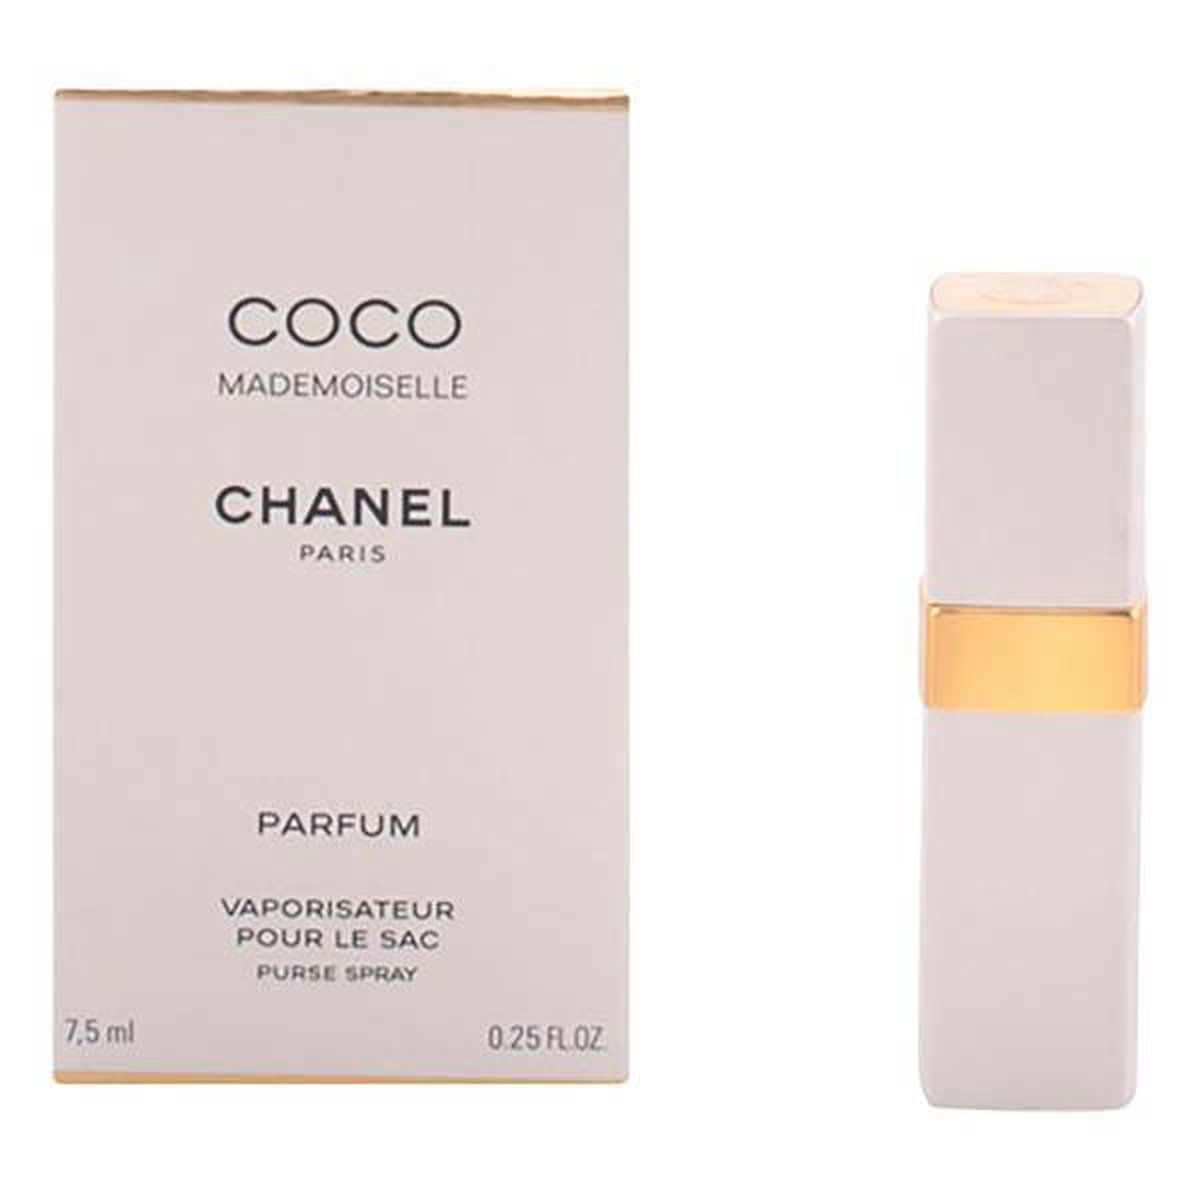 Mademoiselle chanel отзывы. Coco Mademoiselle Chanel Parfum 7.5 ml. Coco Mademoiselle Chanel 7 ml. Chanel Coco Mademoiselle Parfum 7.5 ml Purse Spray. Coco Mademoiselle 7.5 ml.